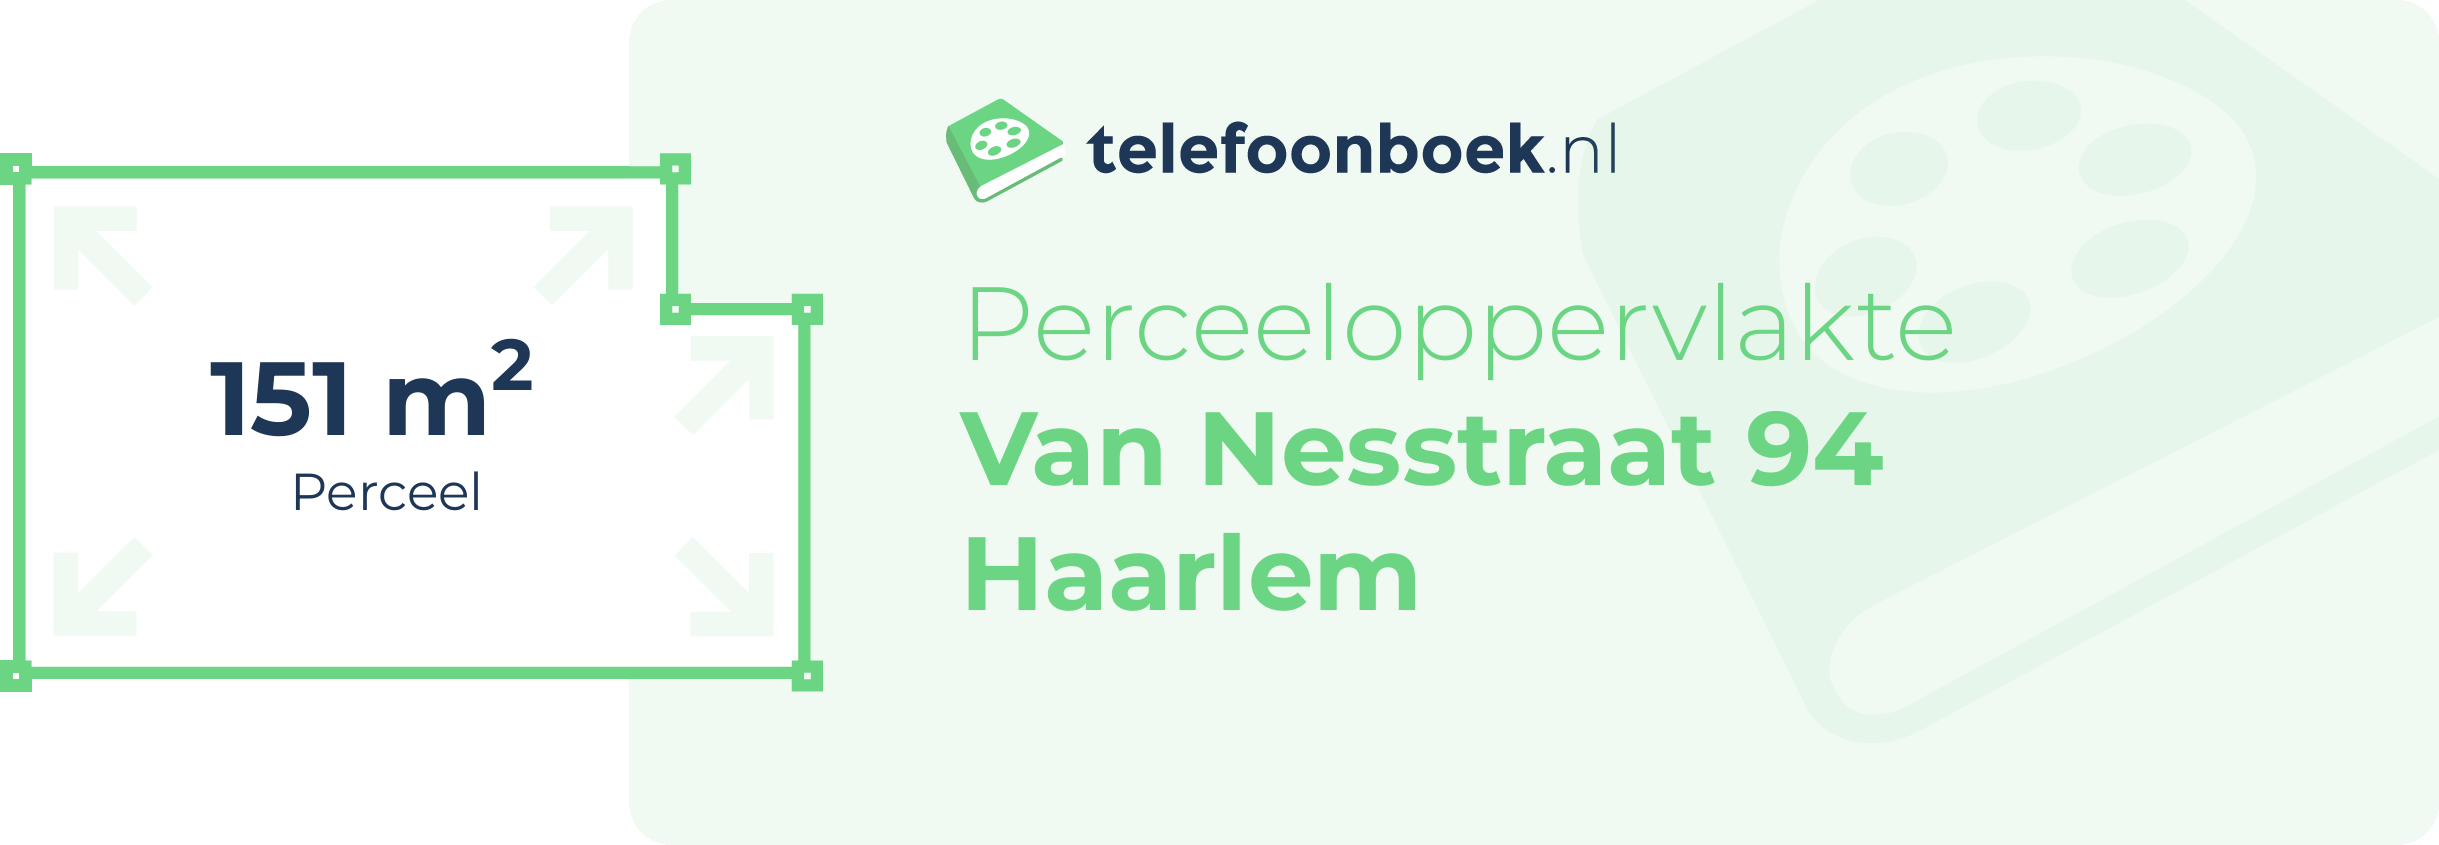 Perceeloppervlakte Van Nesstraat 94 Haarlem